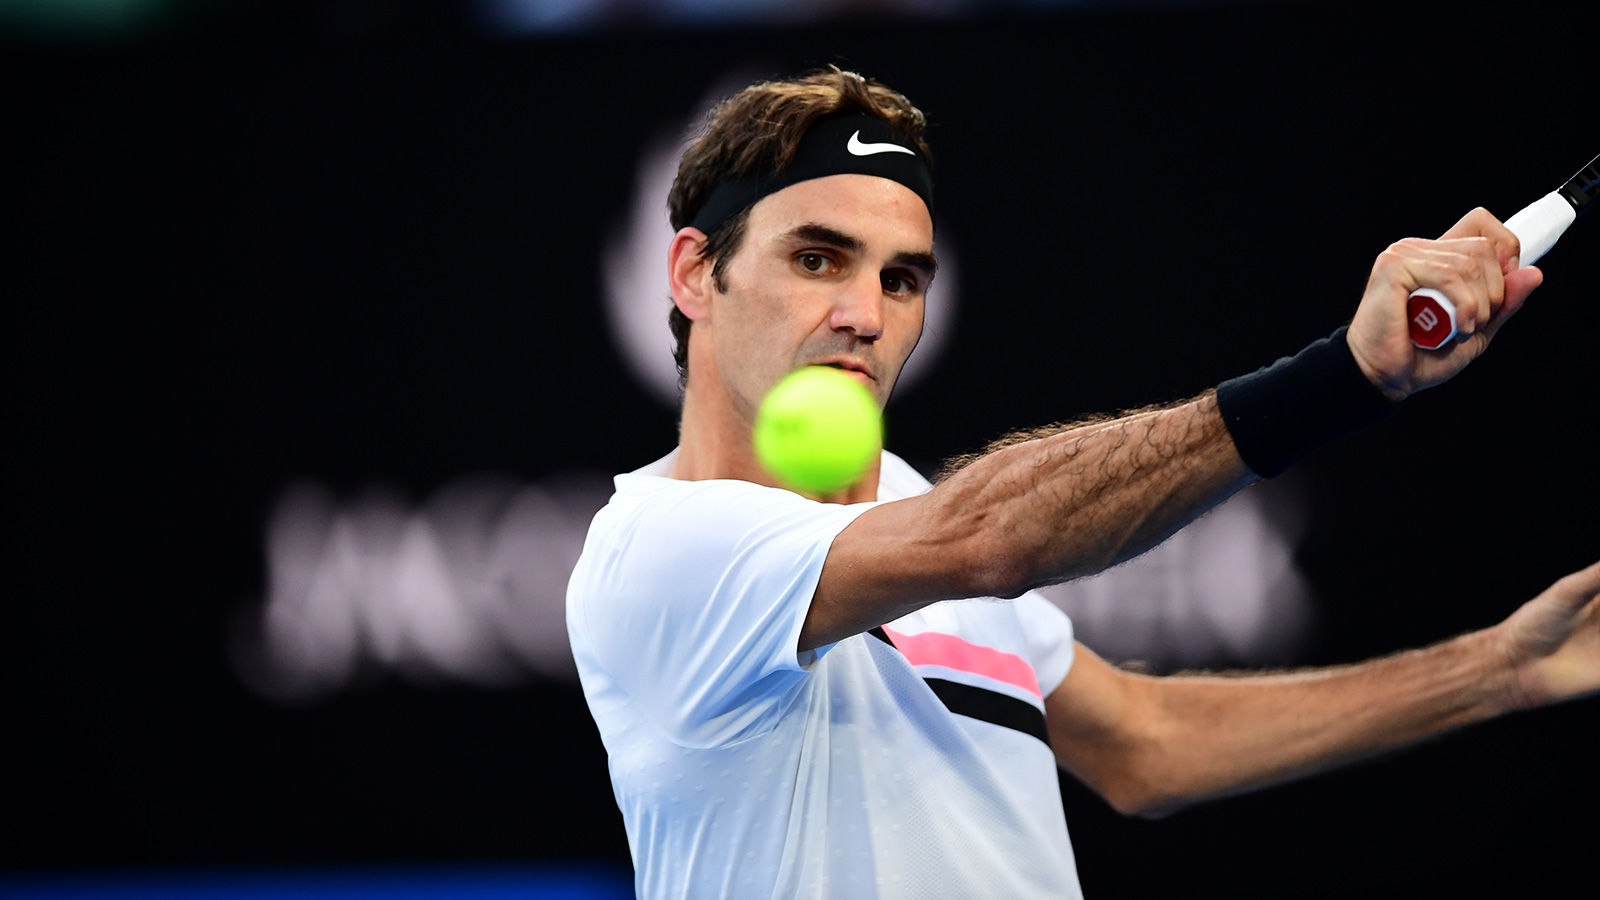 Roger Federer 2018 Australian Open - Federer Defeats Berdych to Reach 14th Australian Open Semifinal